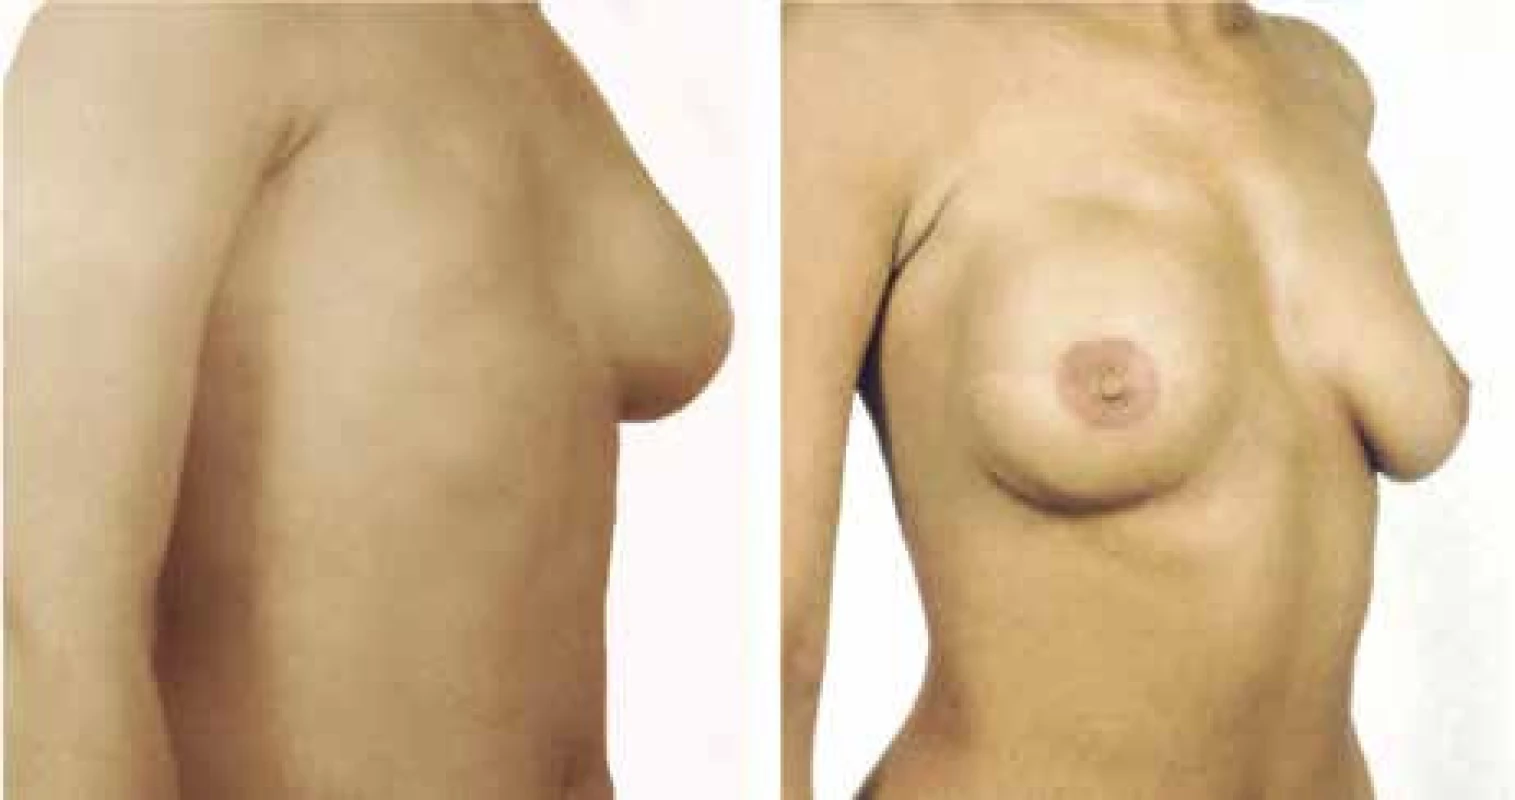 Rekonstrukce prsu s užitím m. latissimus dorsi a implantátem